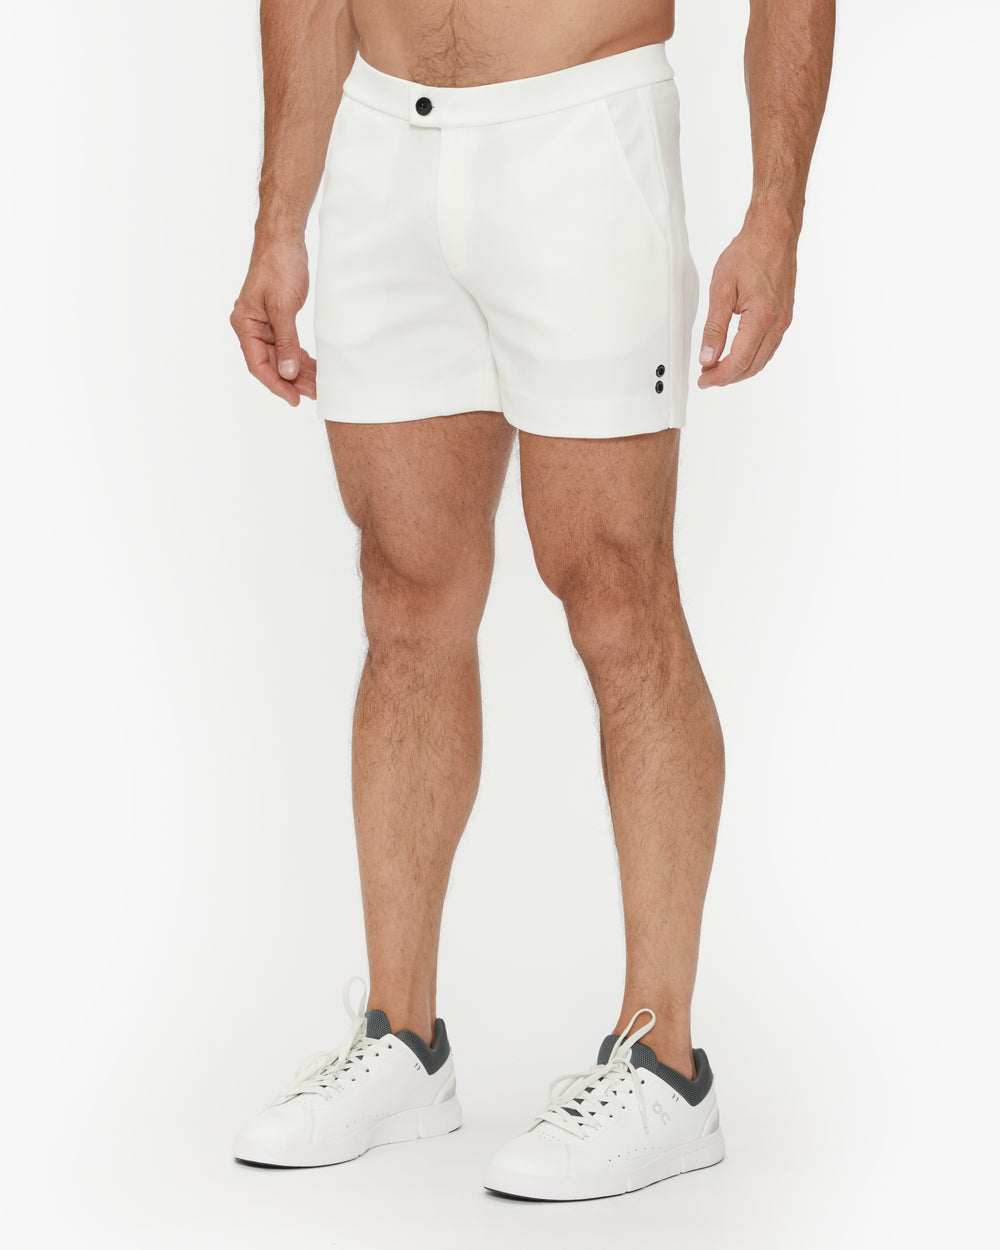 Ron Dorff Tennis Shorts 4" Unlined